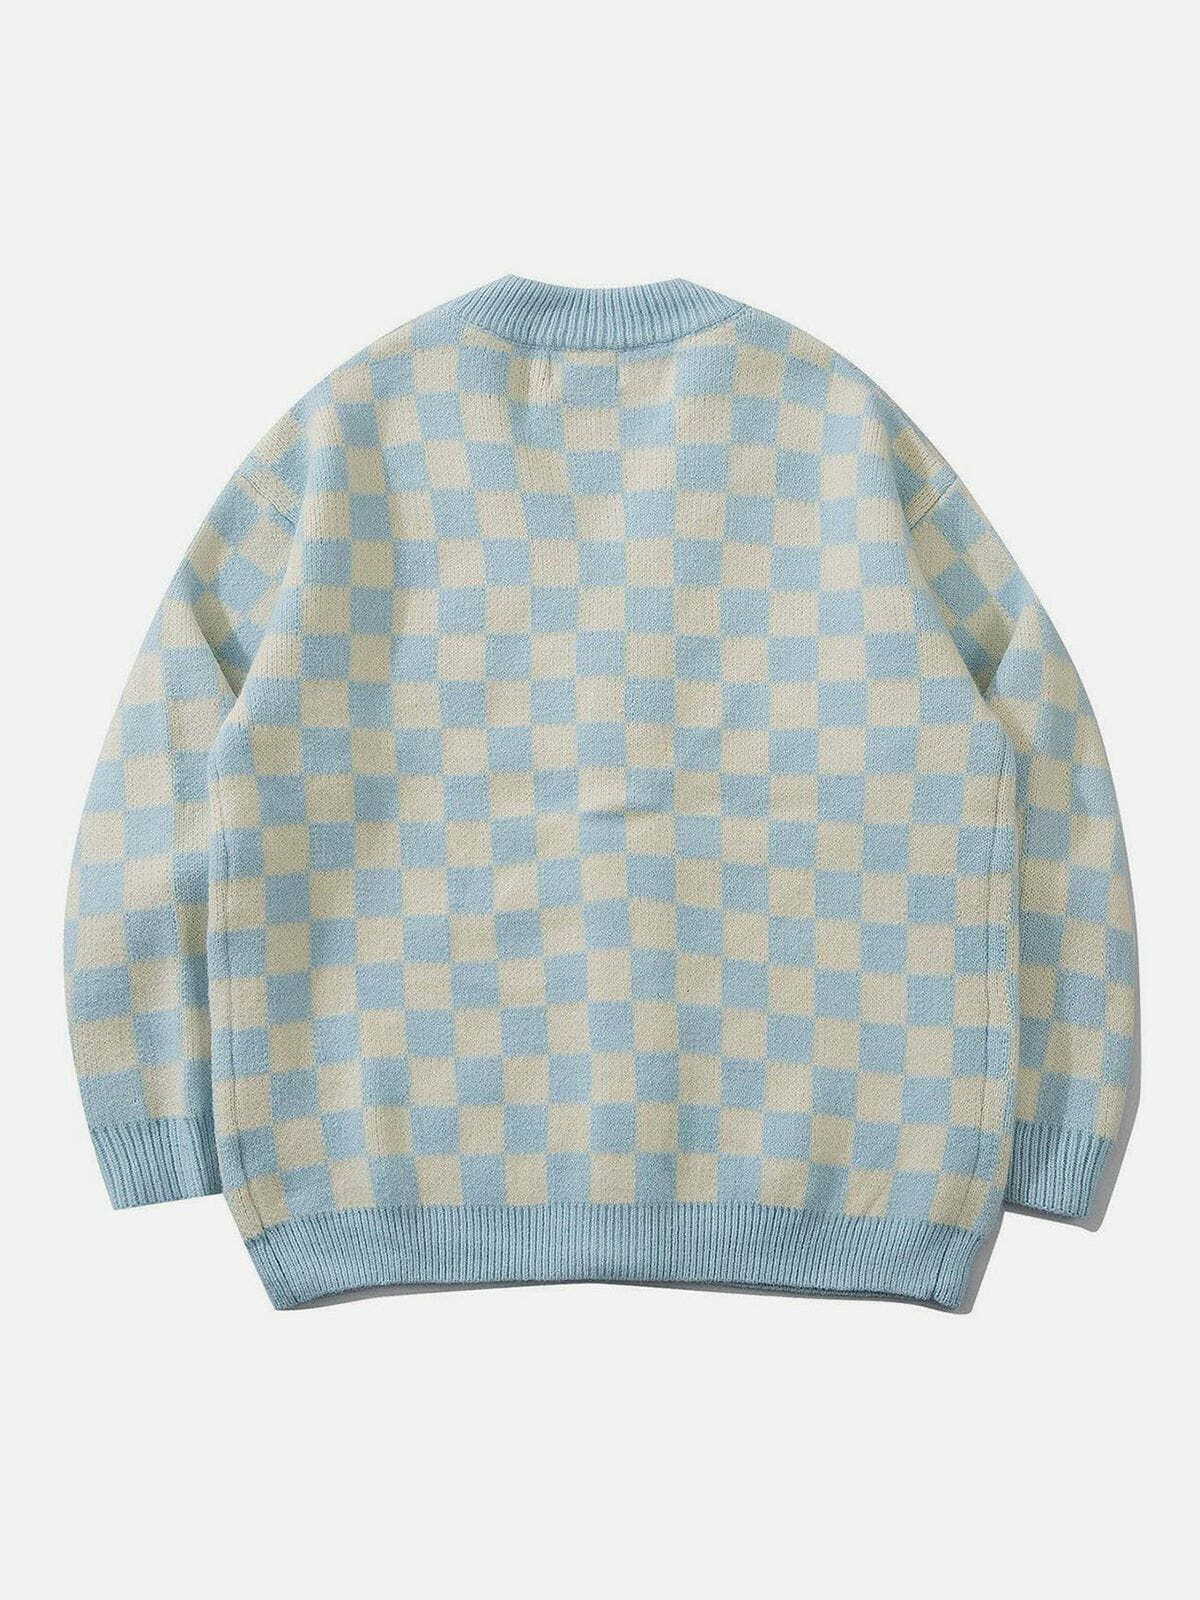 checkerboard knit cardigan retro urban chic 4806